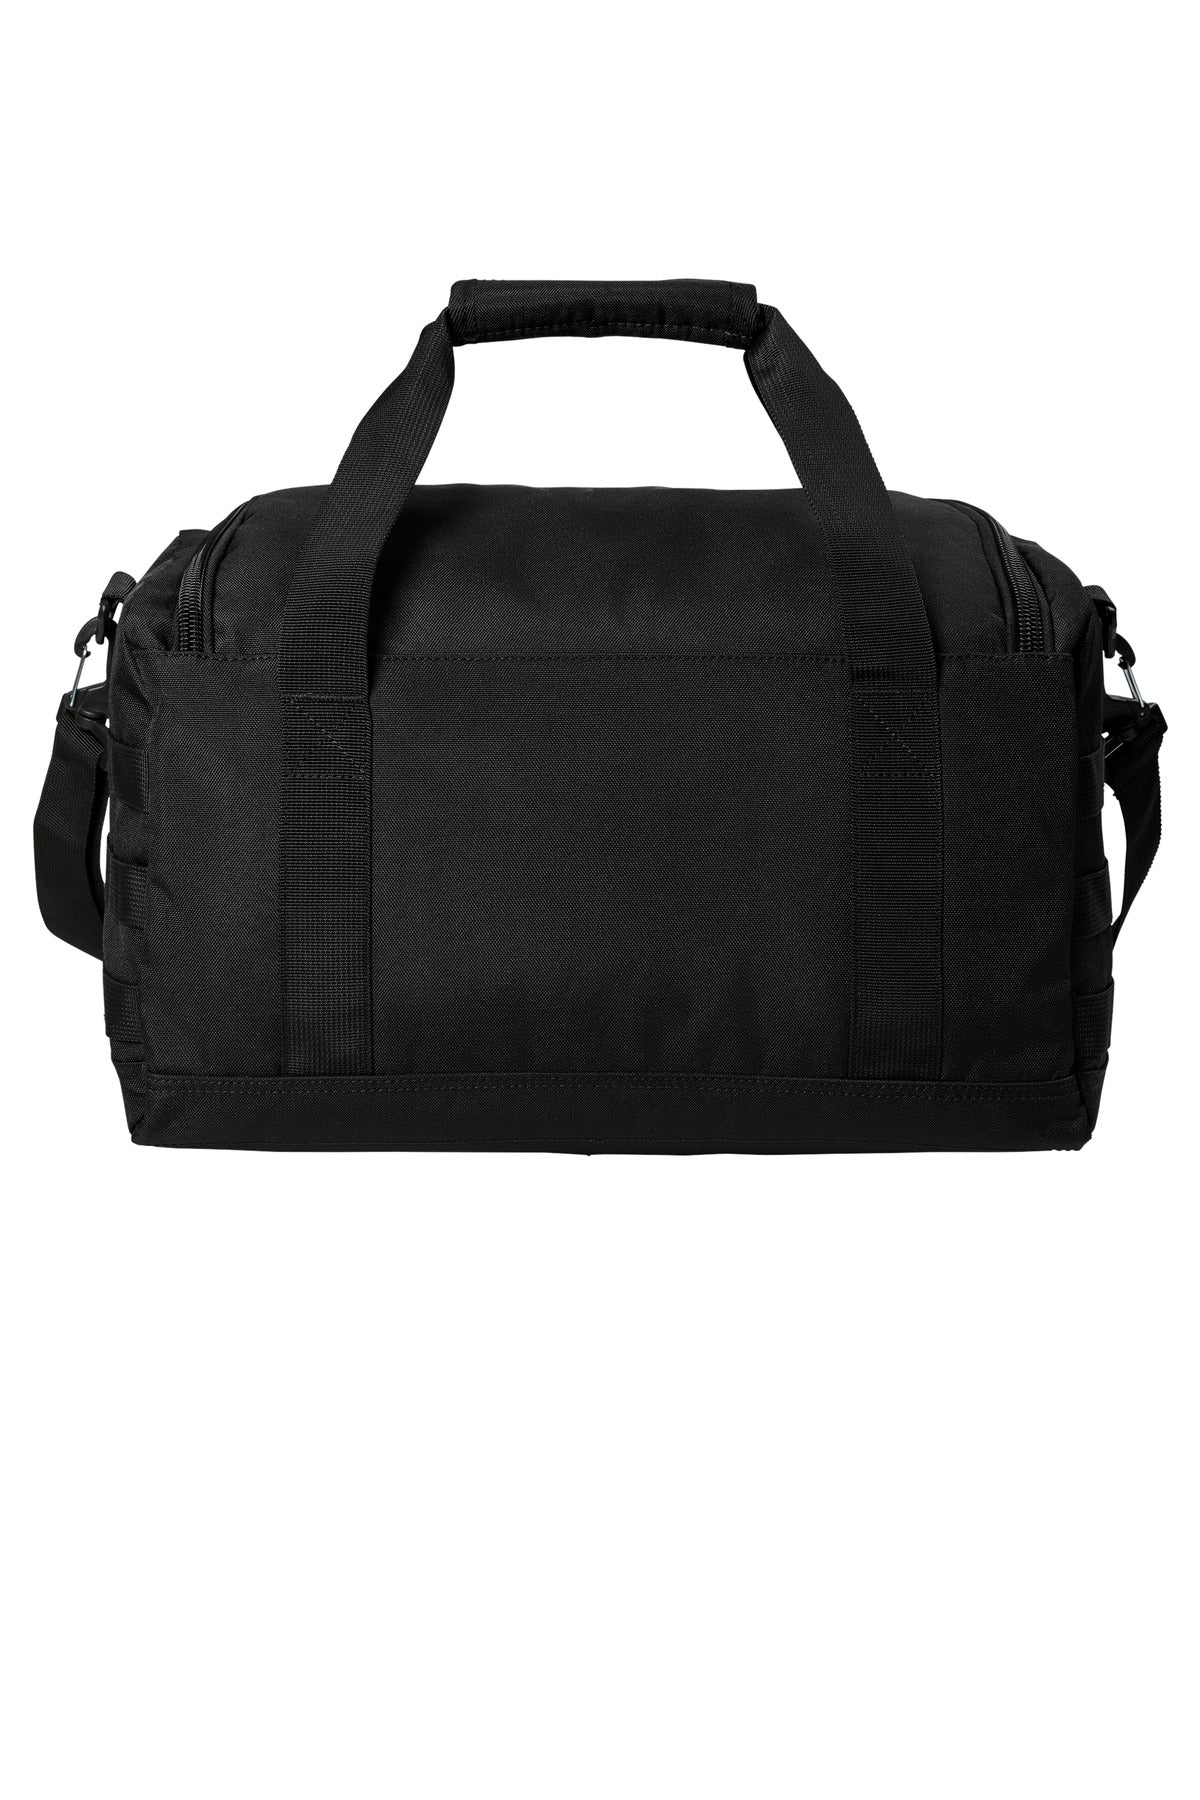 CornerStone® Tactical Gear Bag CSB816 - DFW Impression